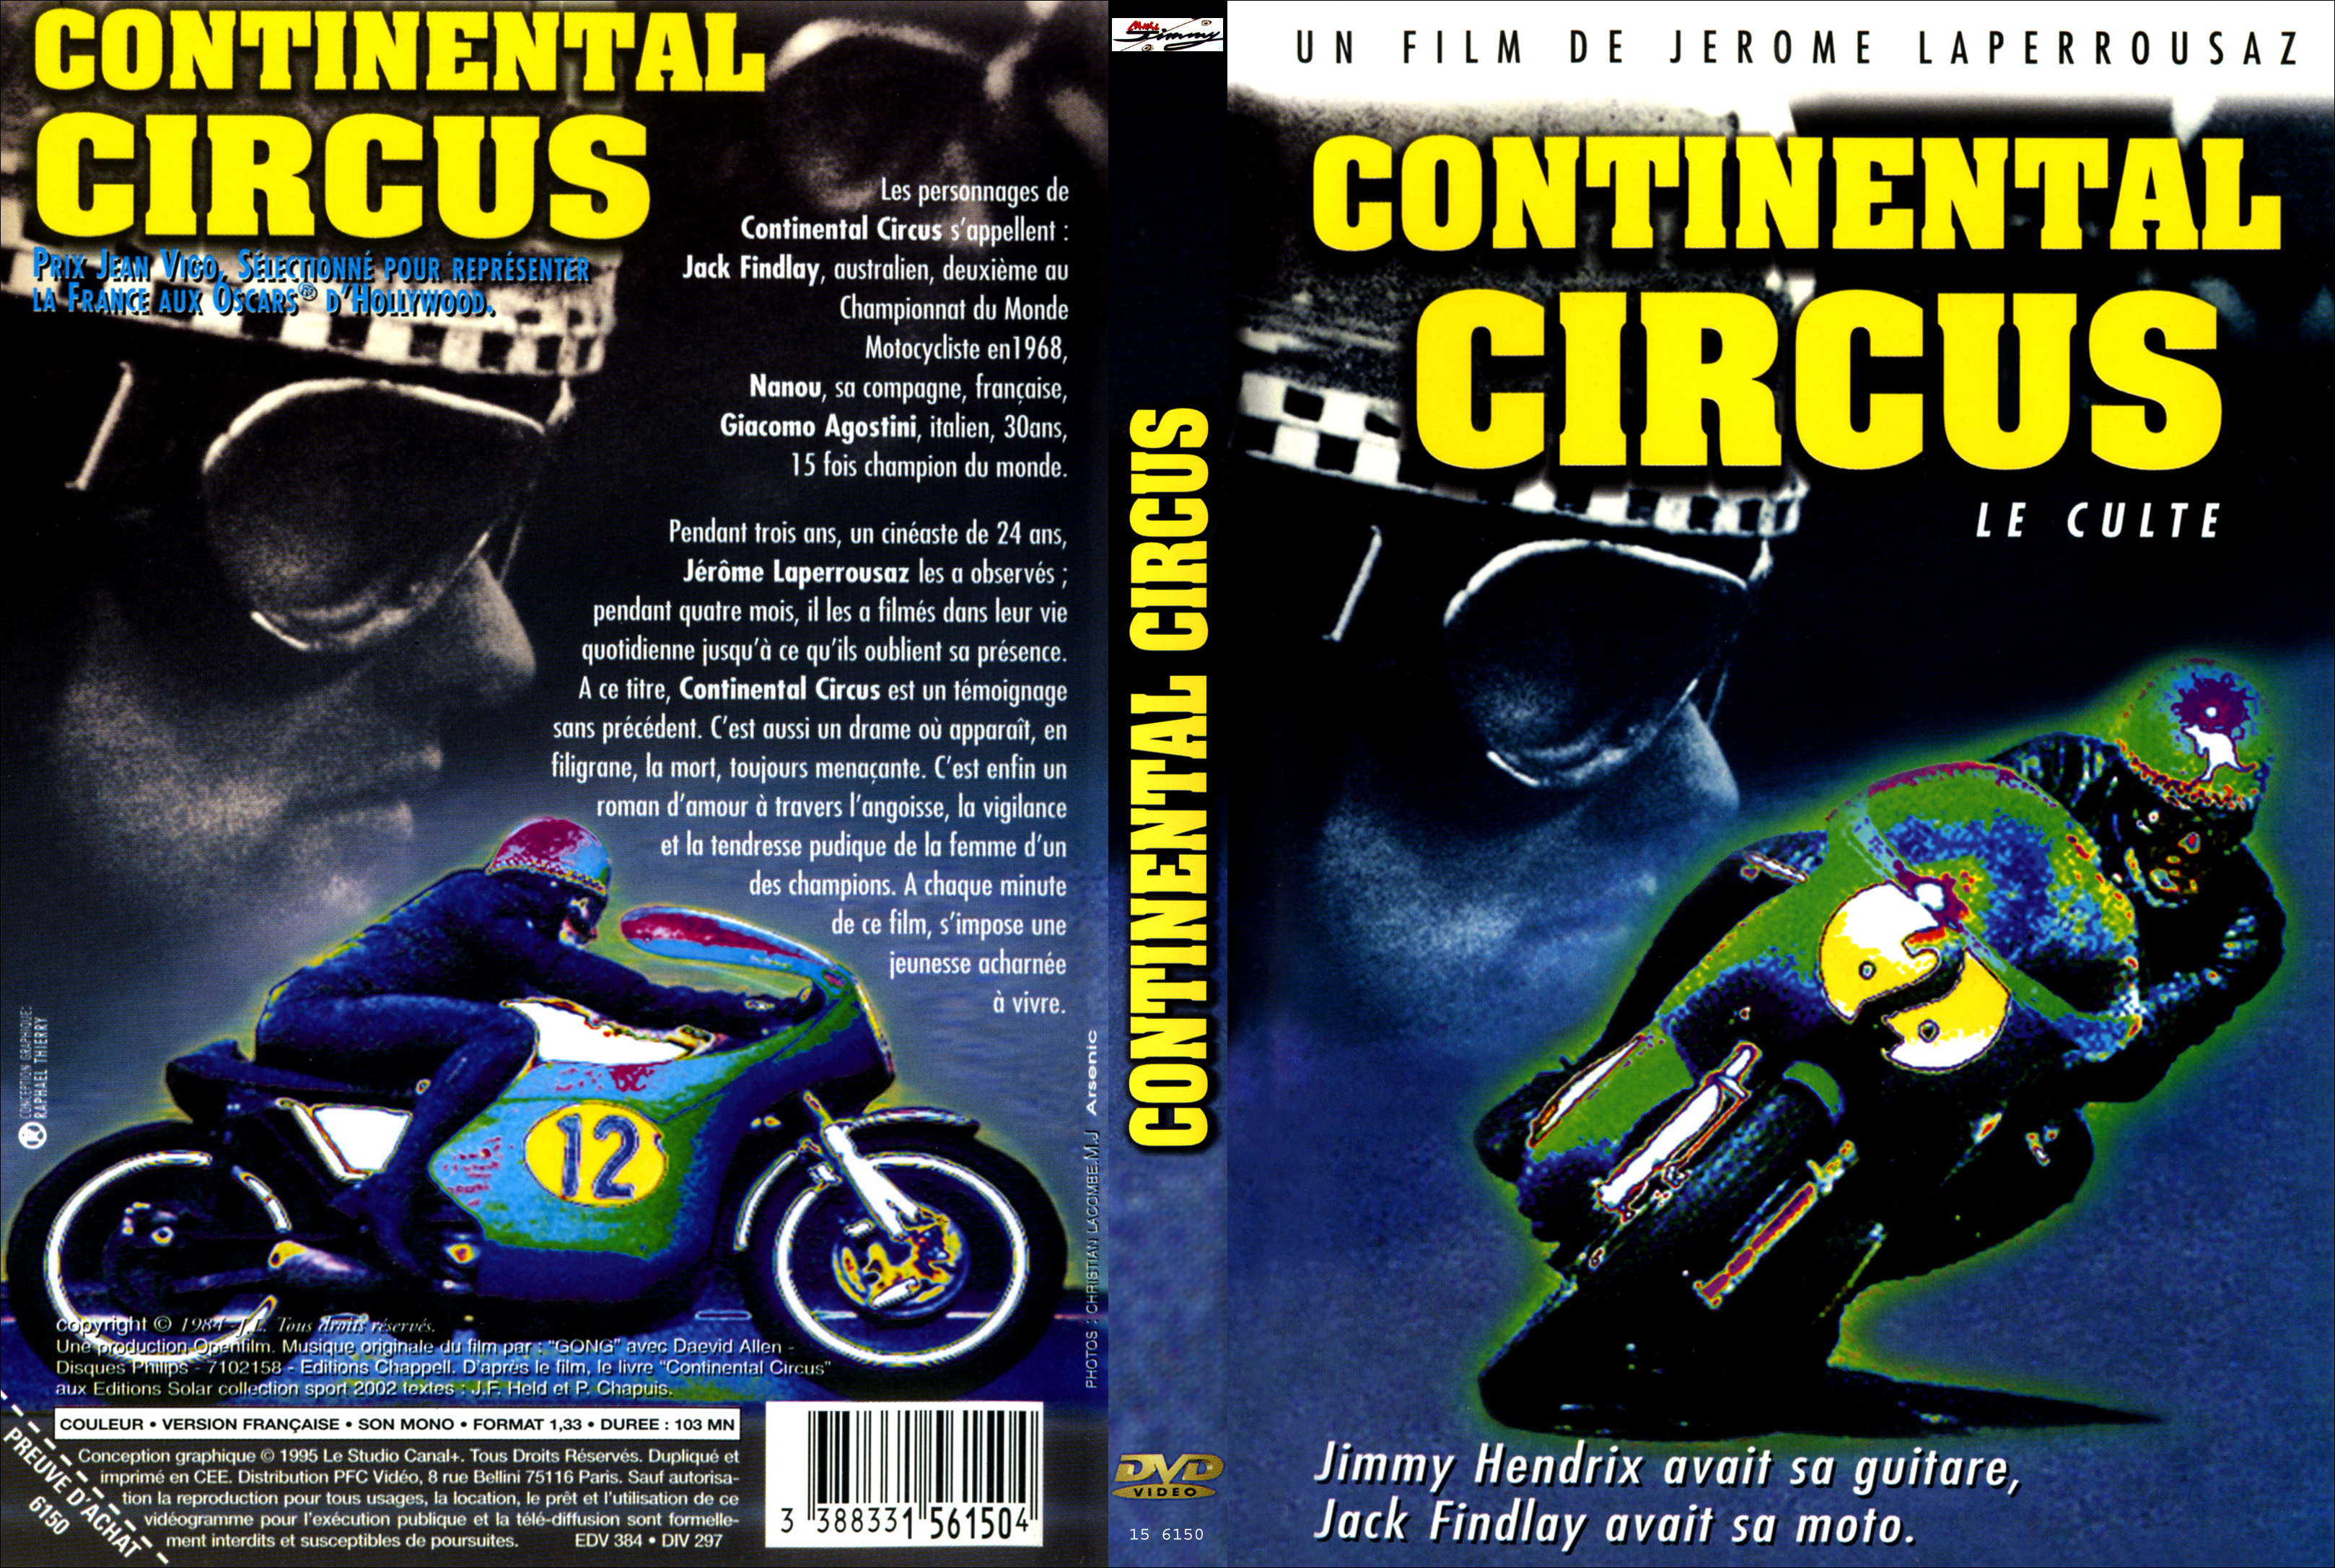 Jaquette DVD Continental circus custom